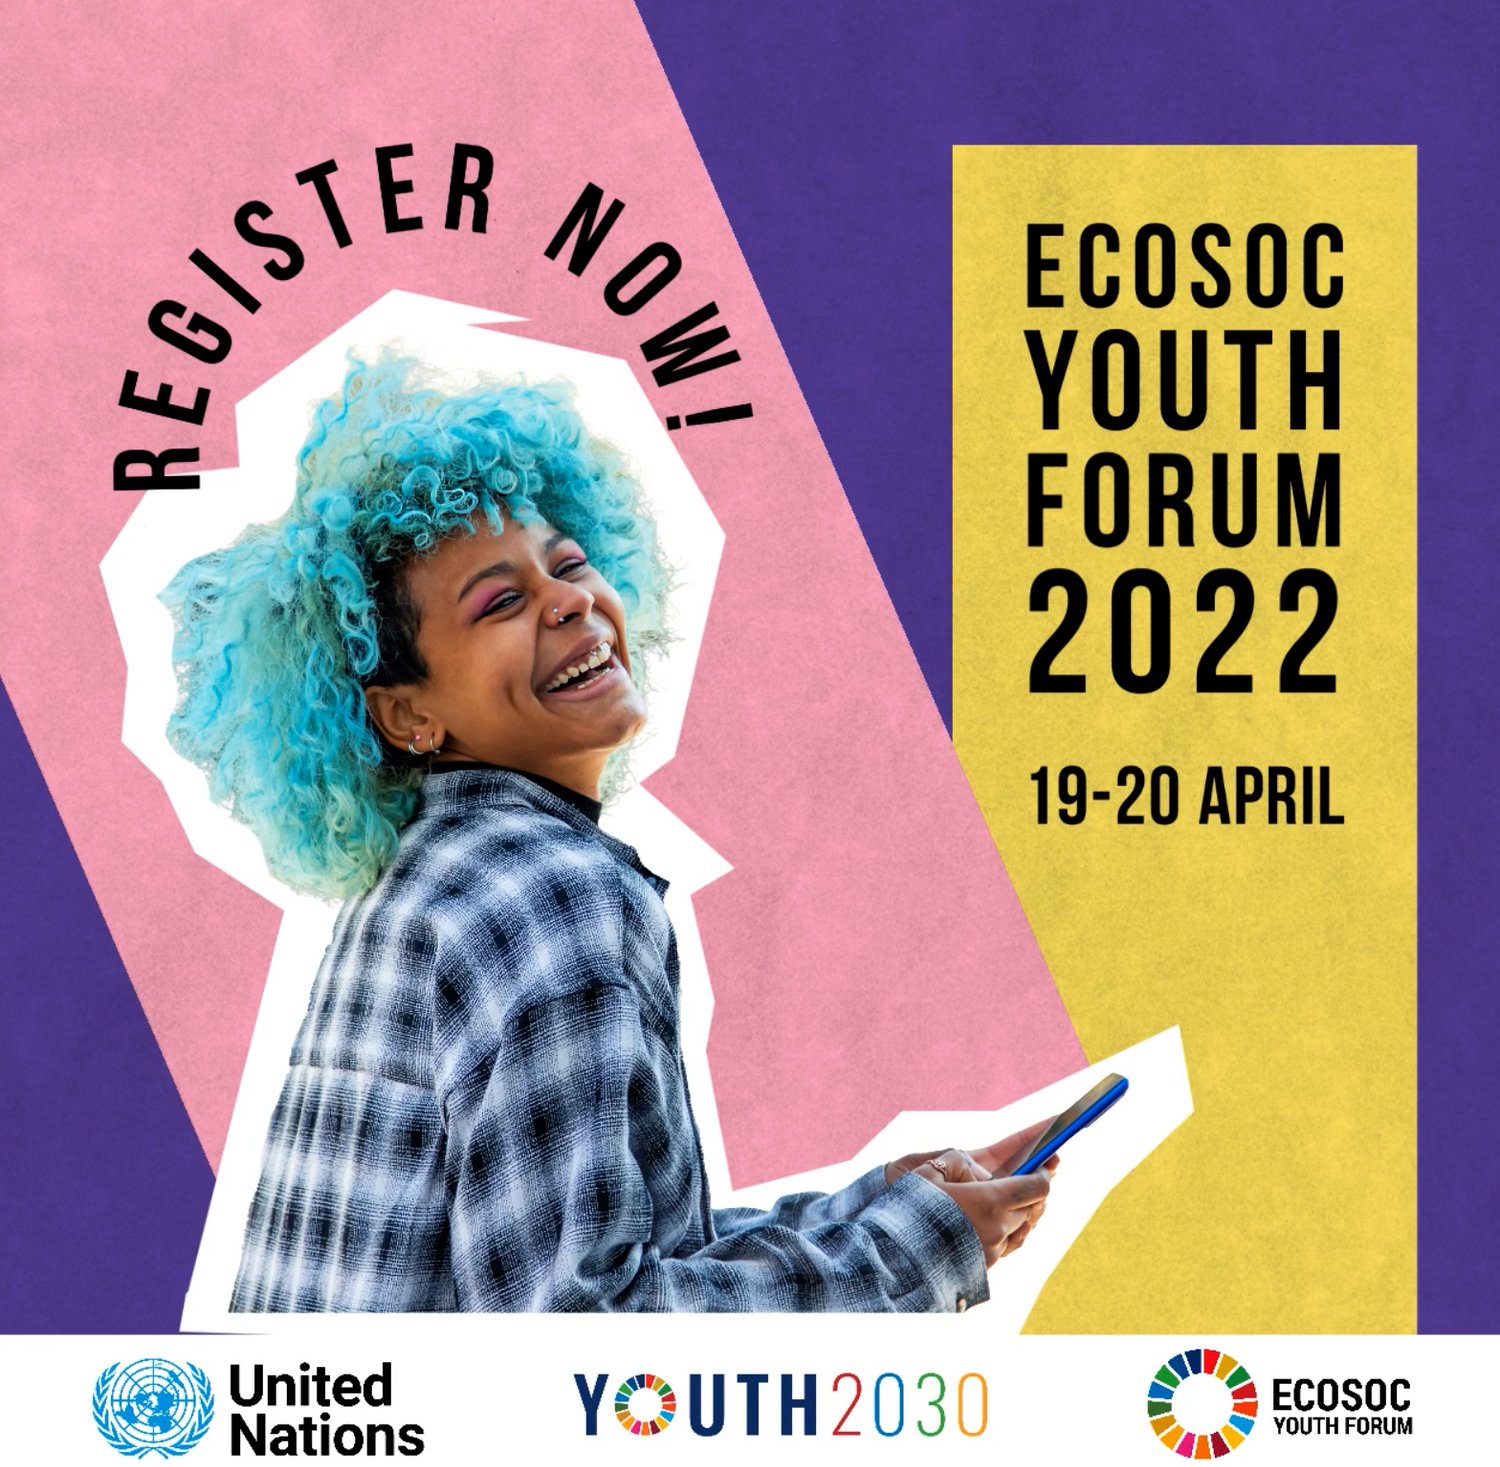 ECOSOC Youth Forum 2022 Advocacy Accelerator